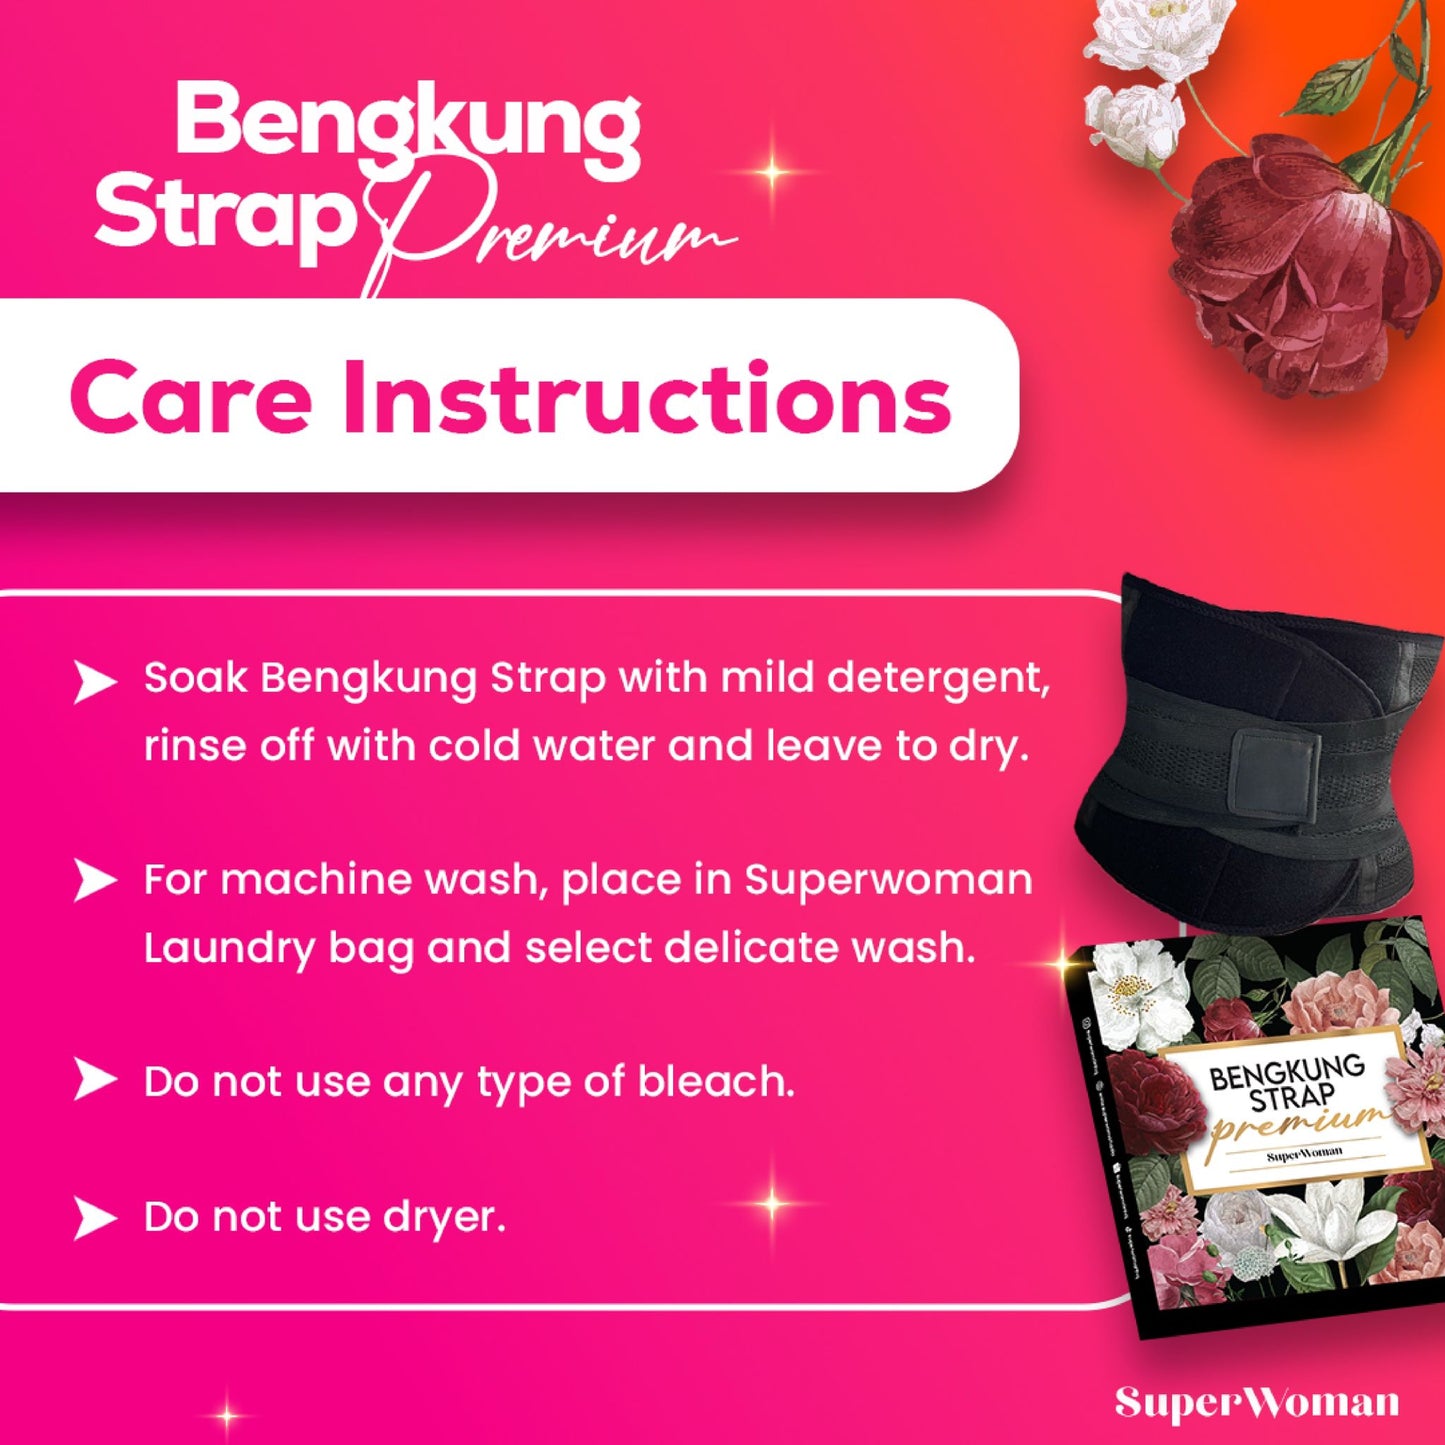 Bengkung Strap Premium(pre-order)